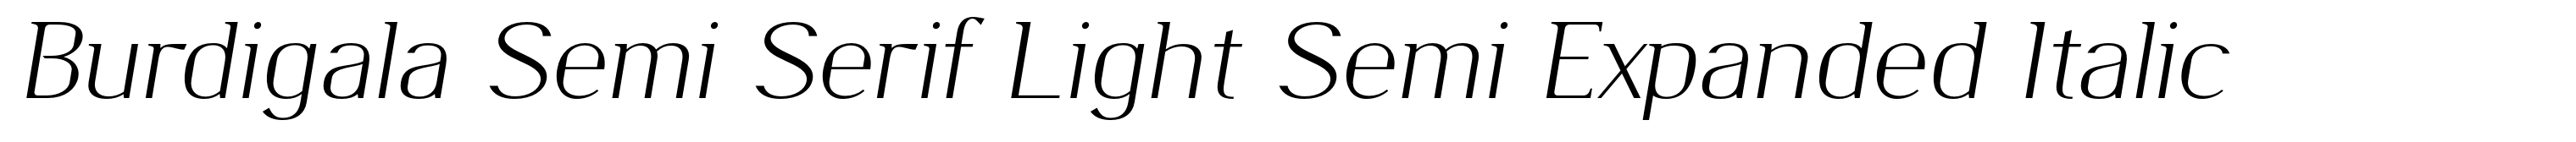 Burdigala Semi Serif Light Semi Expanded Italic